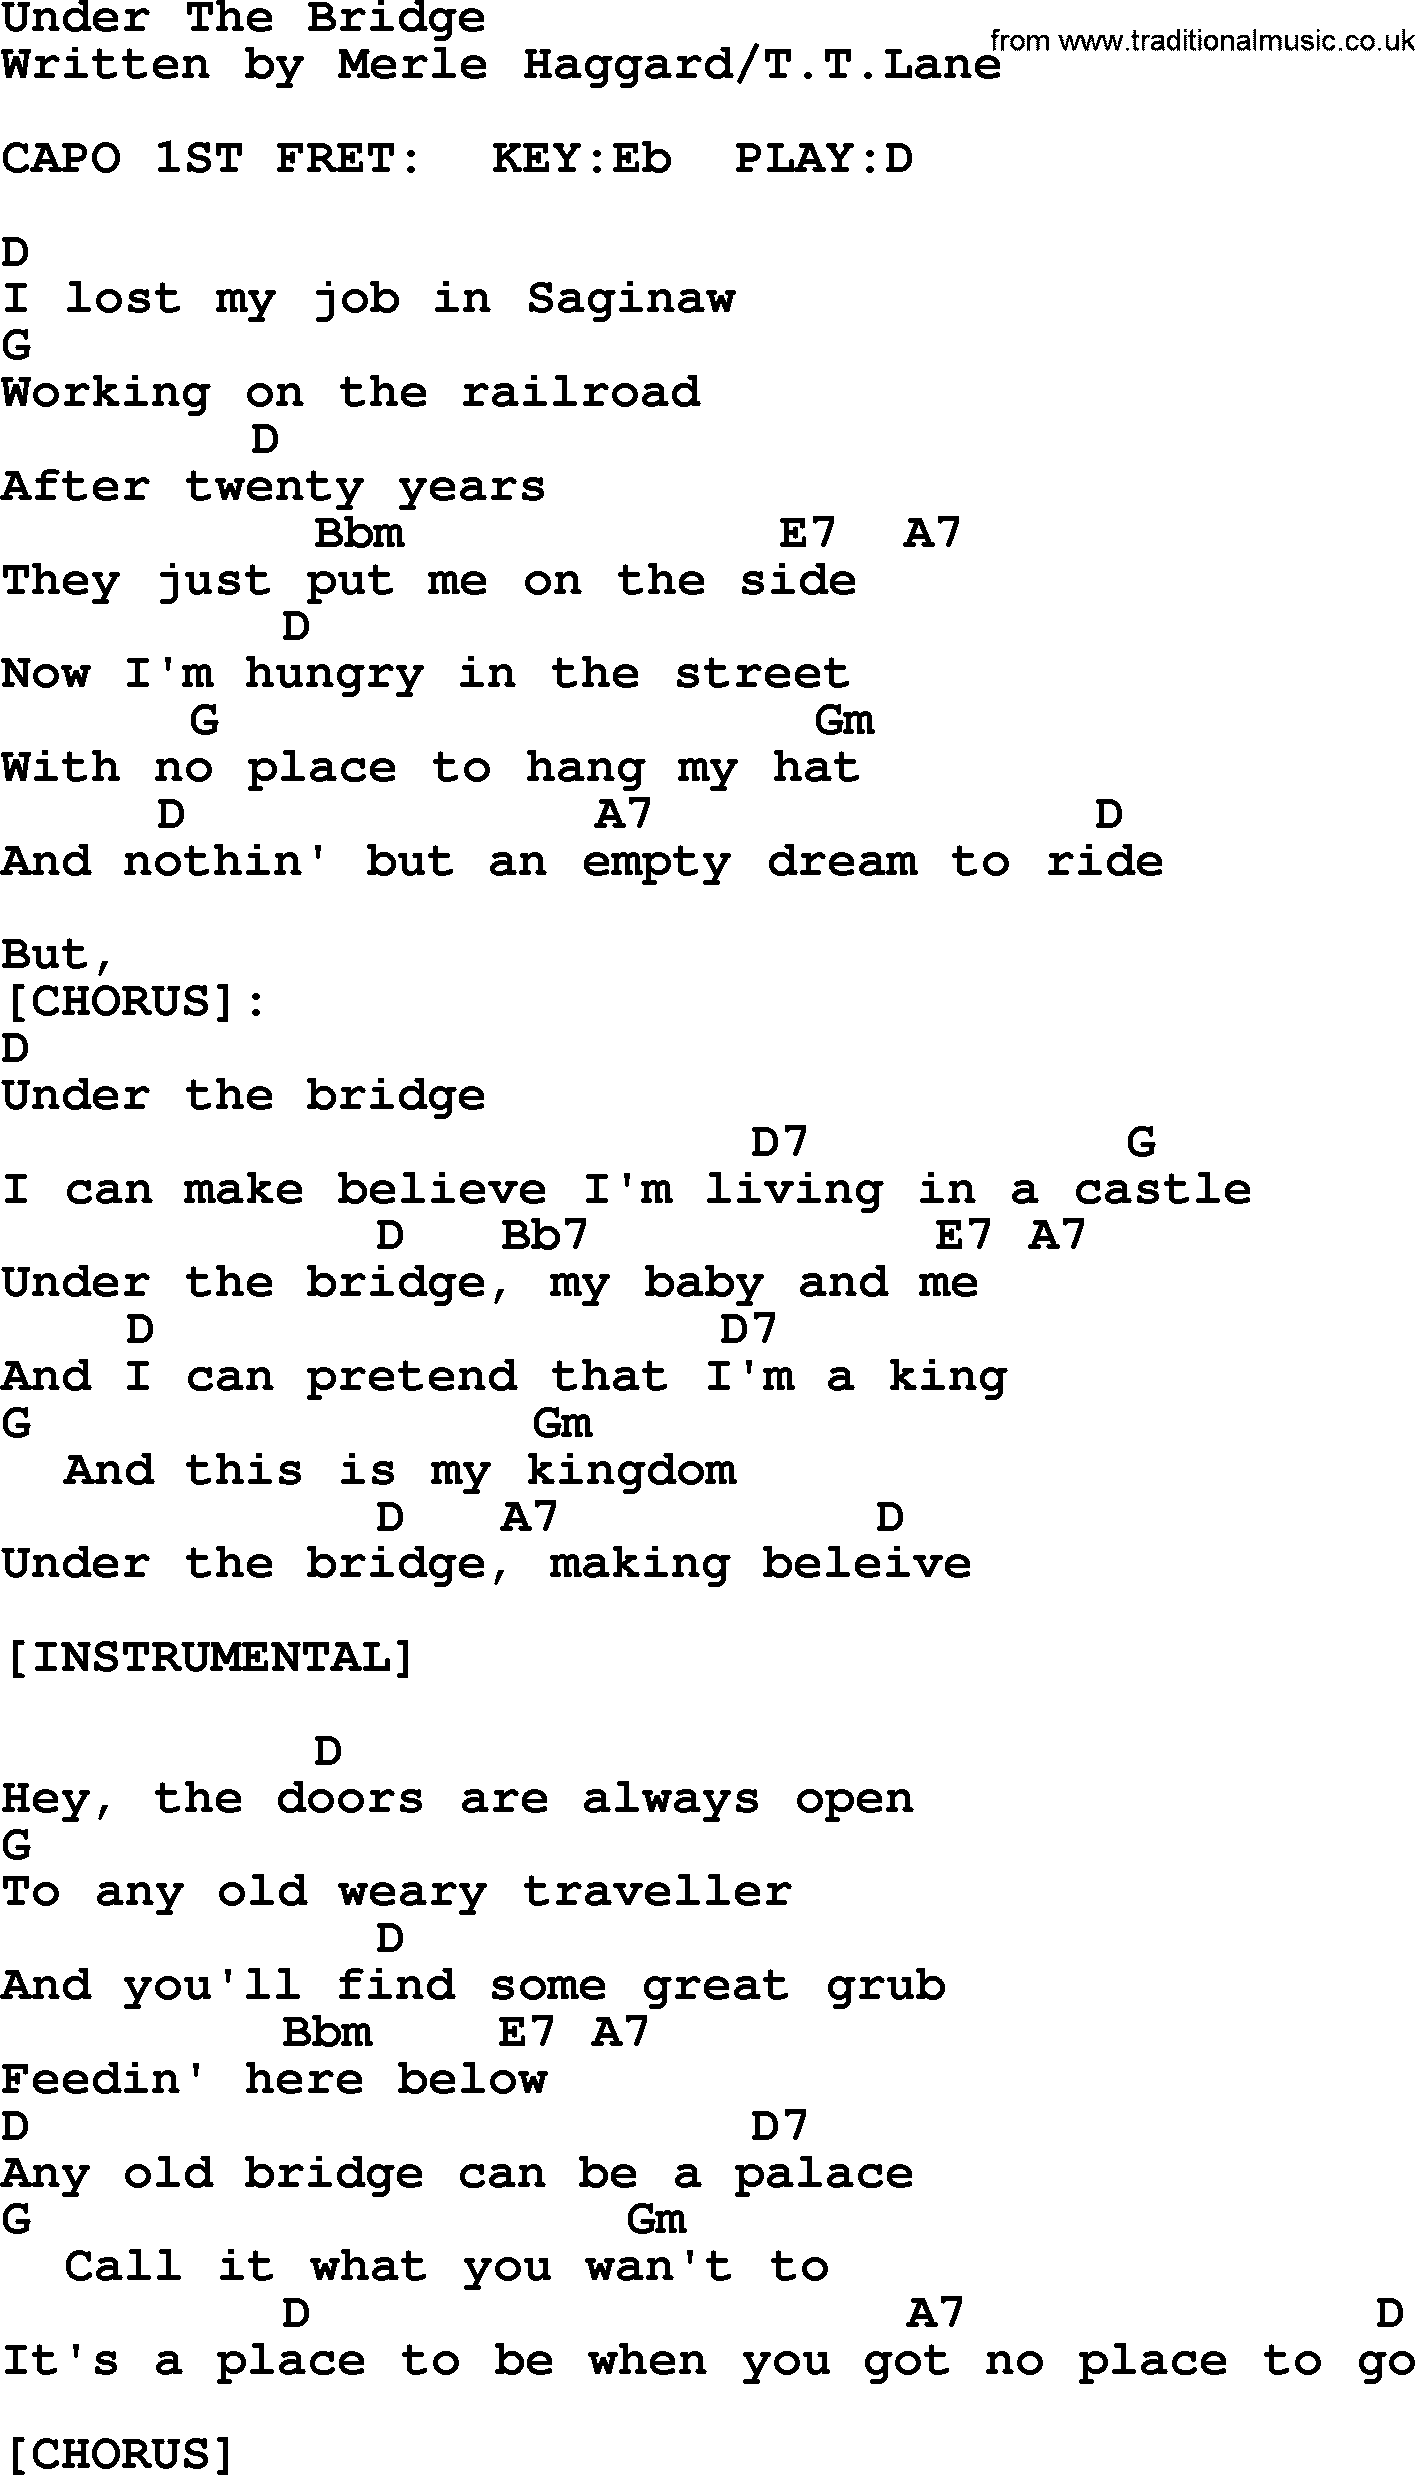 Merle Haggard song: Under The Bridge, lyrics and chords